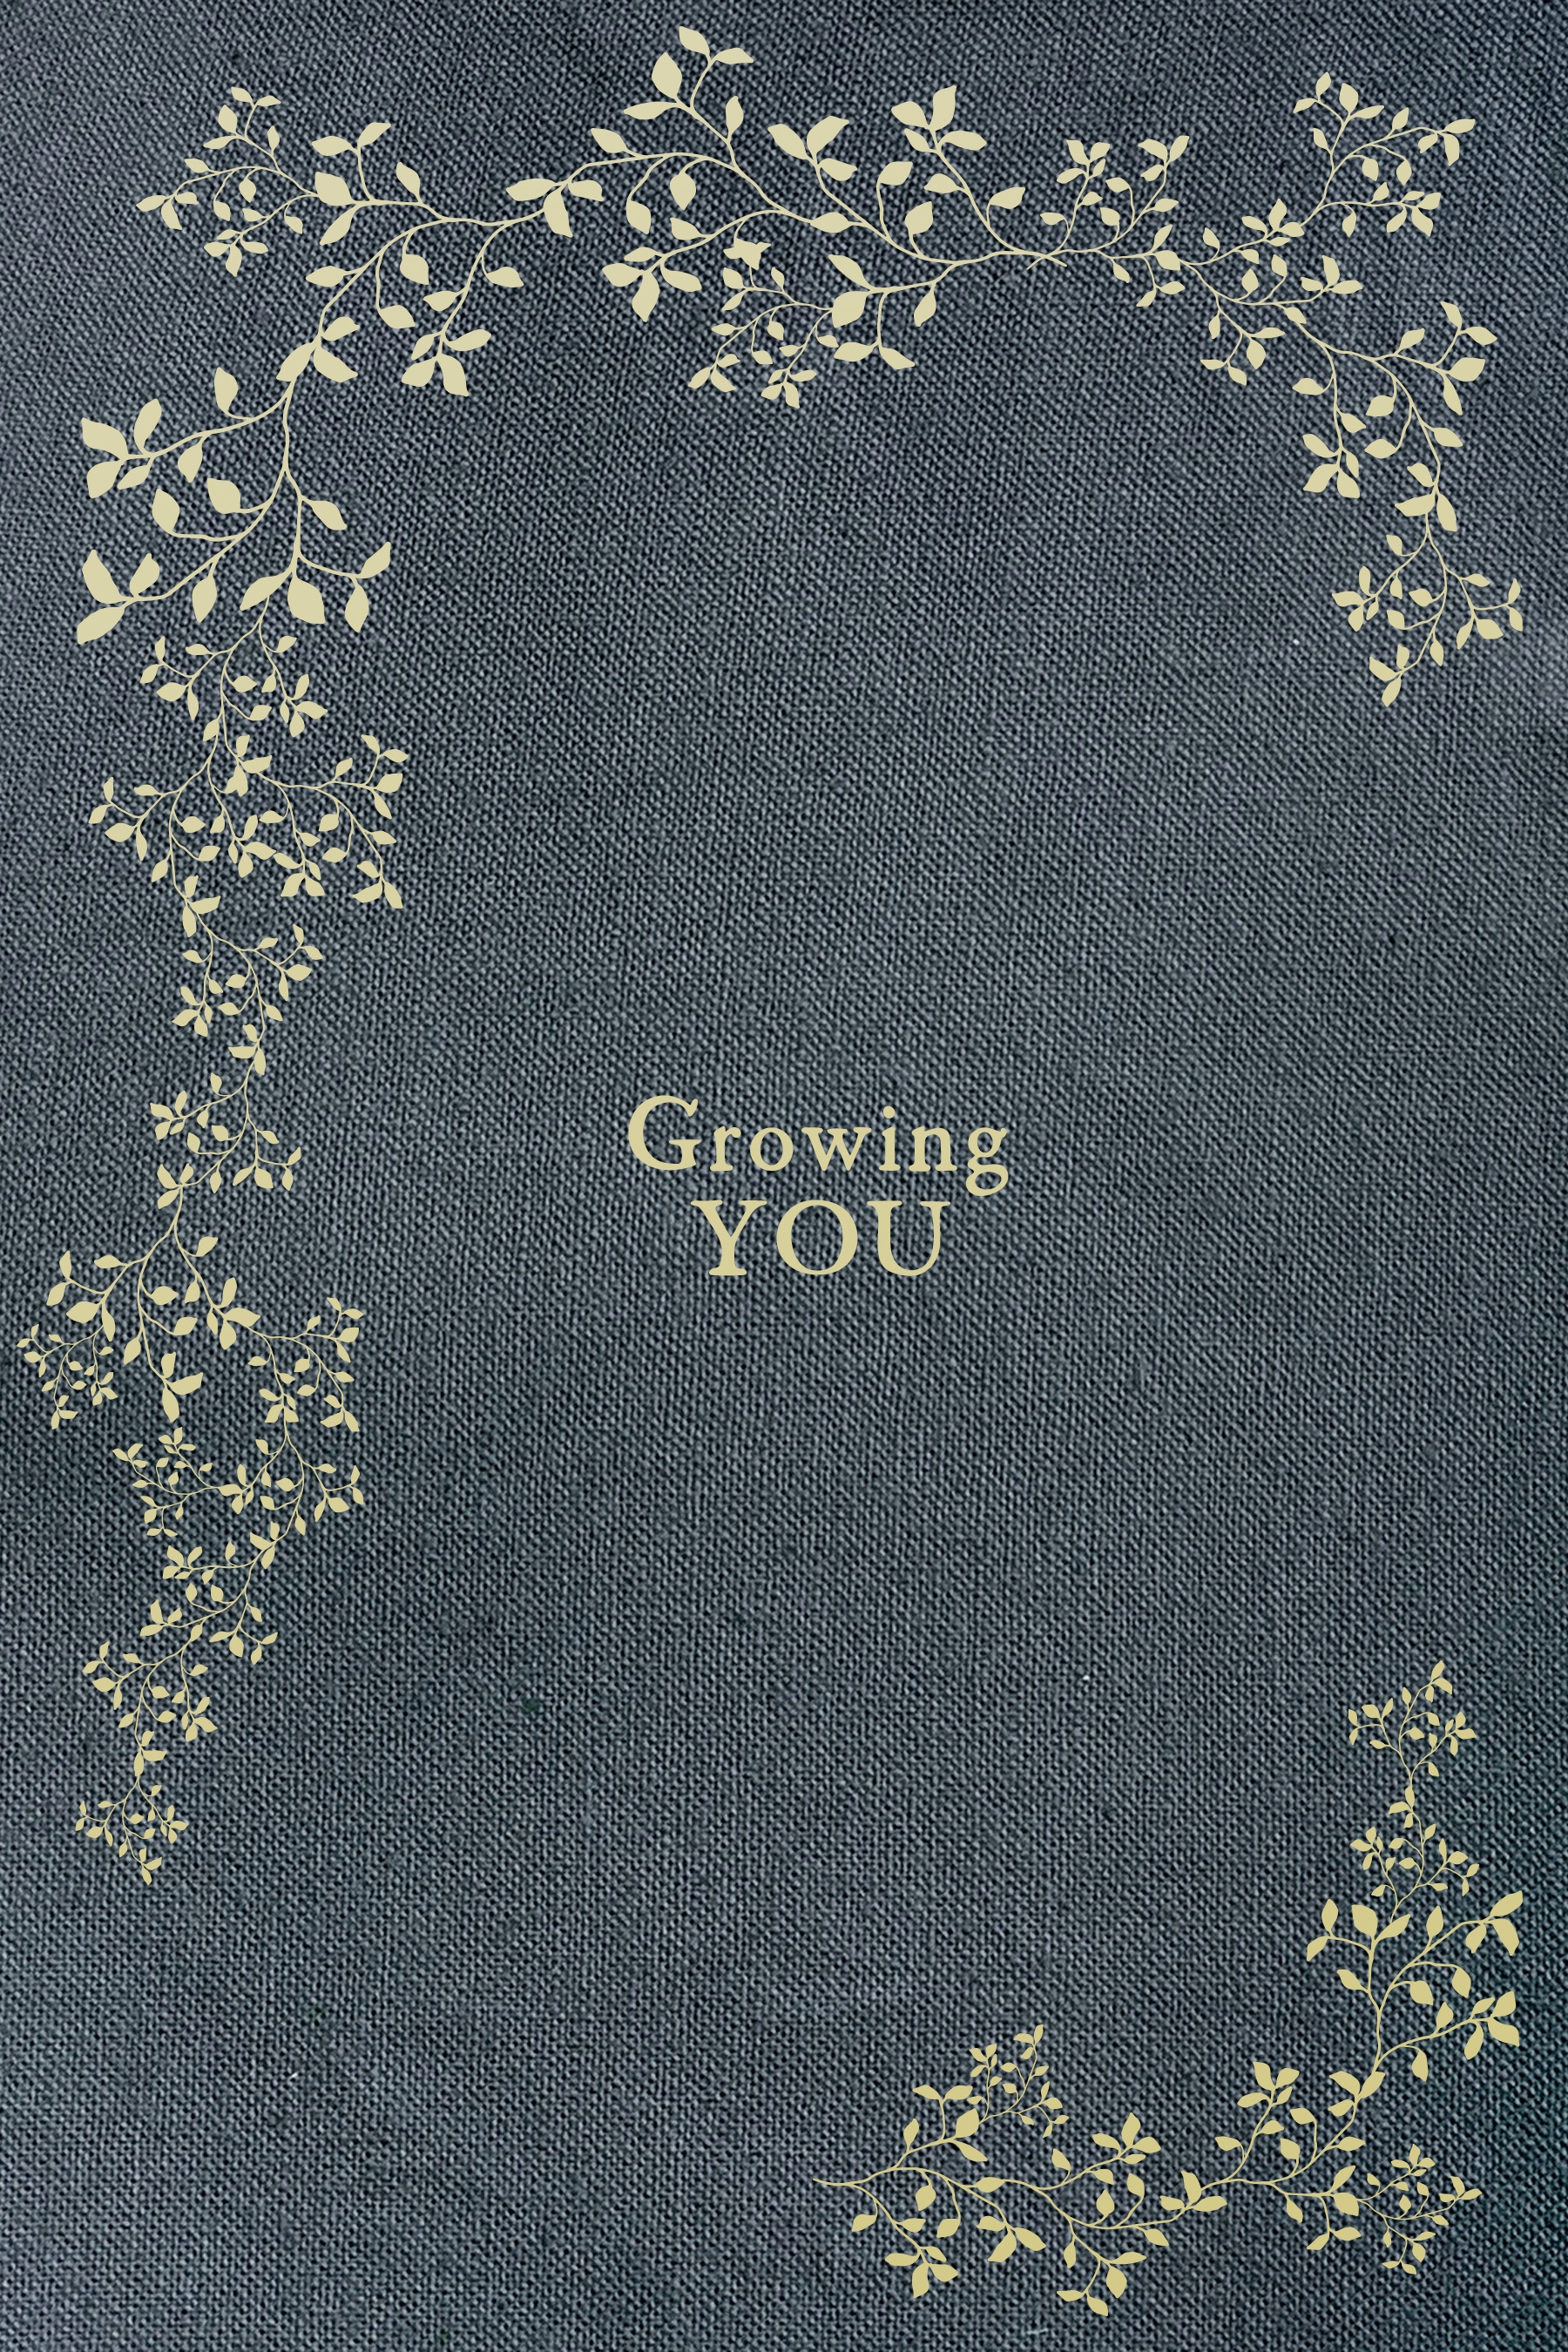 Growing Up by Korie Herold - Penguin Books Australia